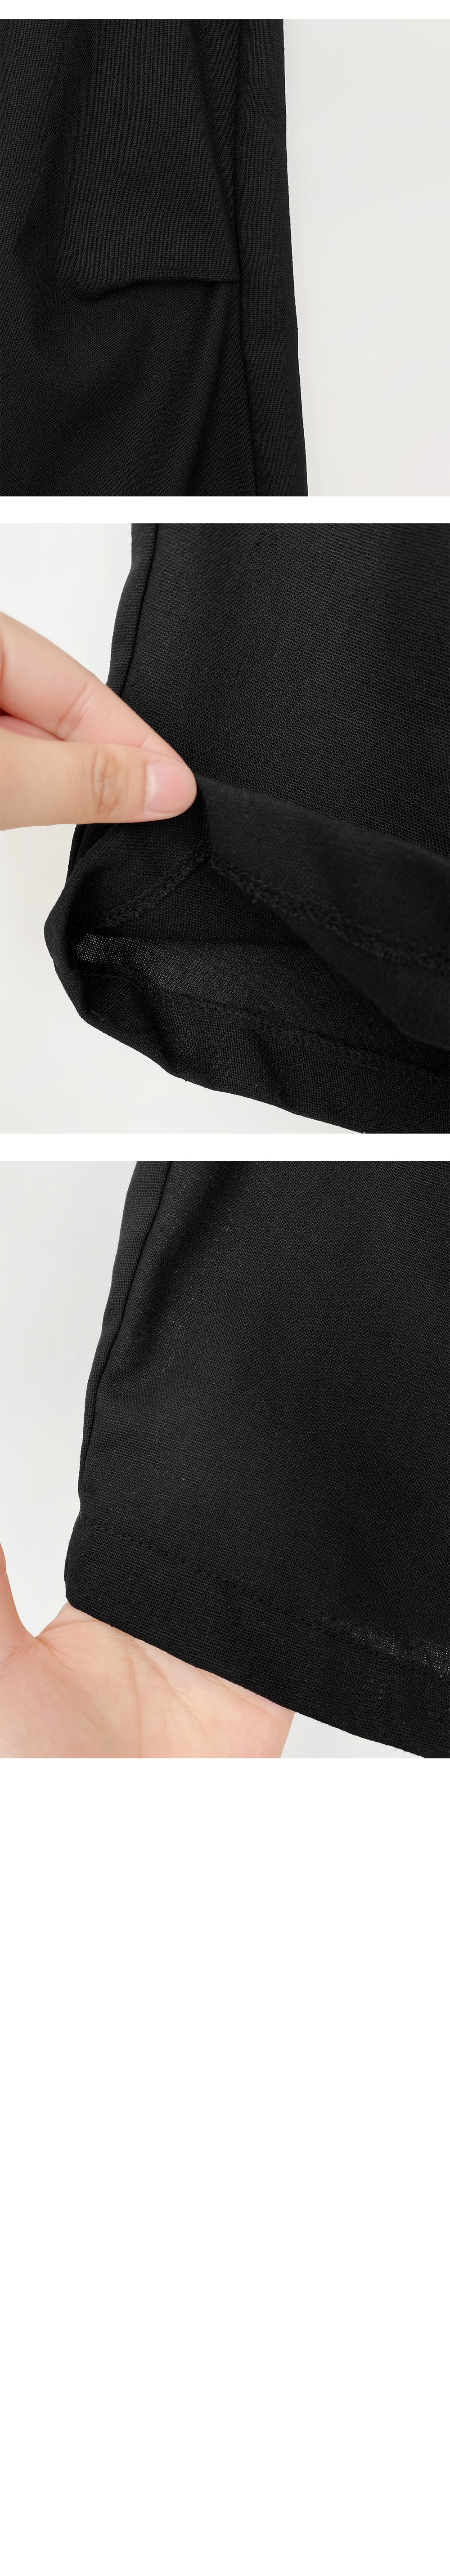 sleeveless detail image-S1L14